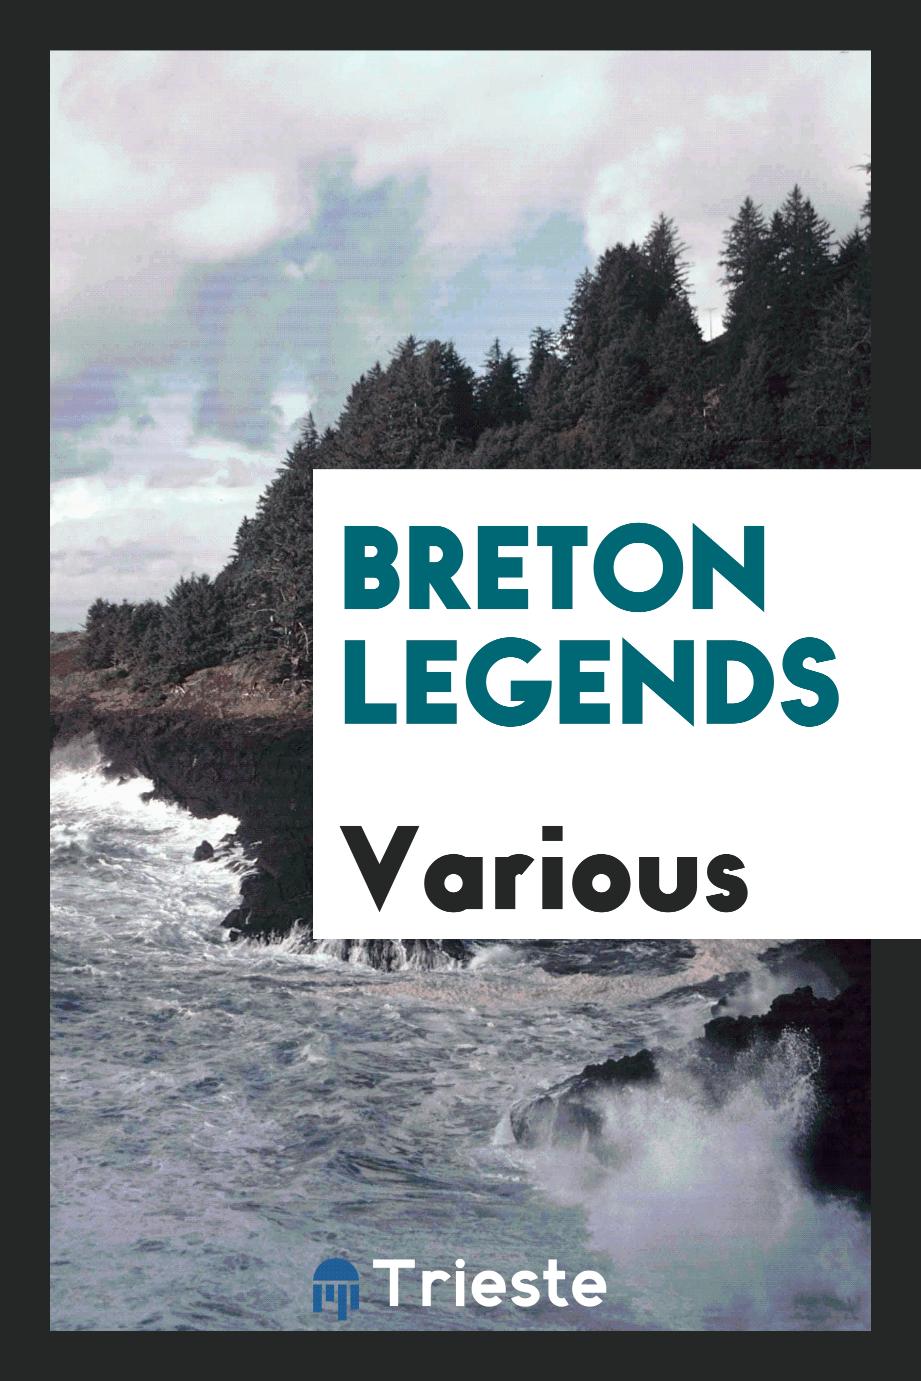 Breton legends